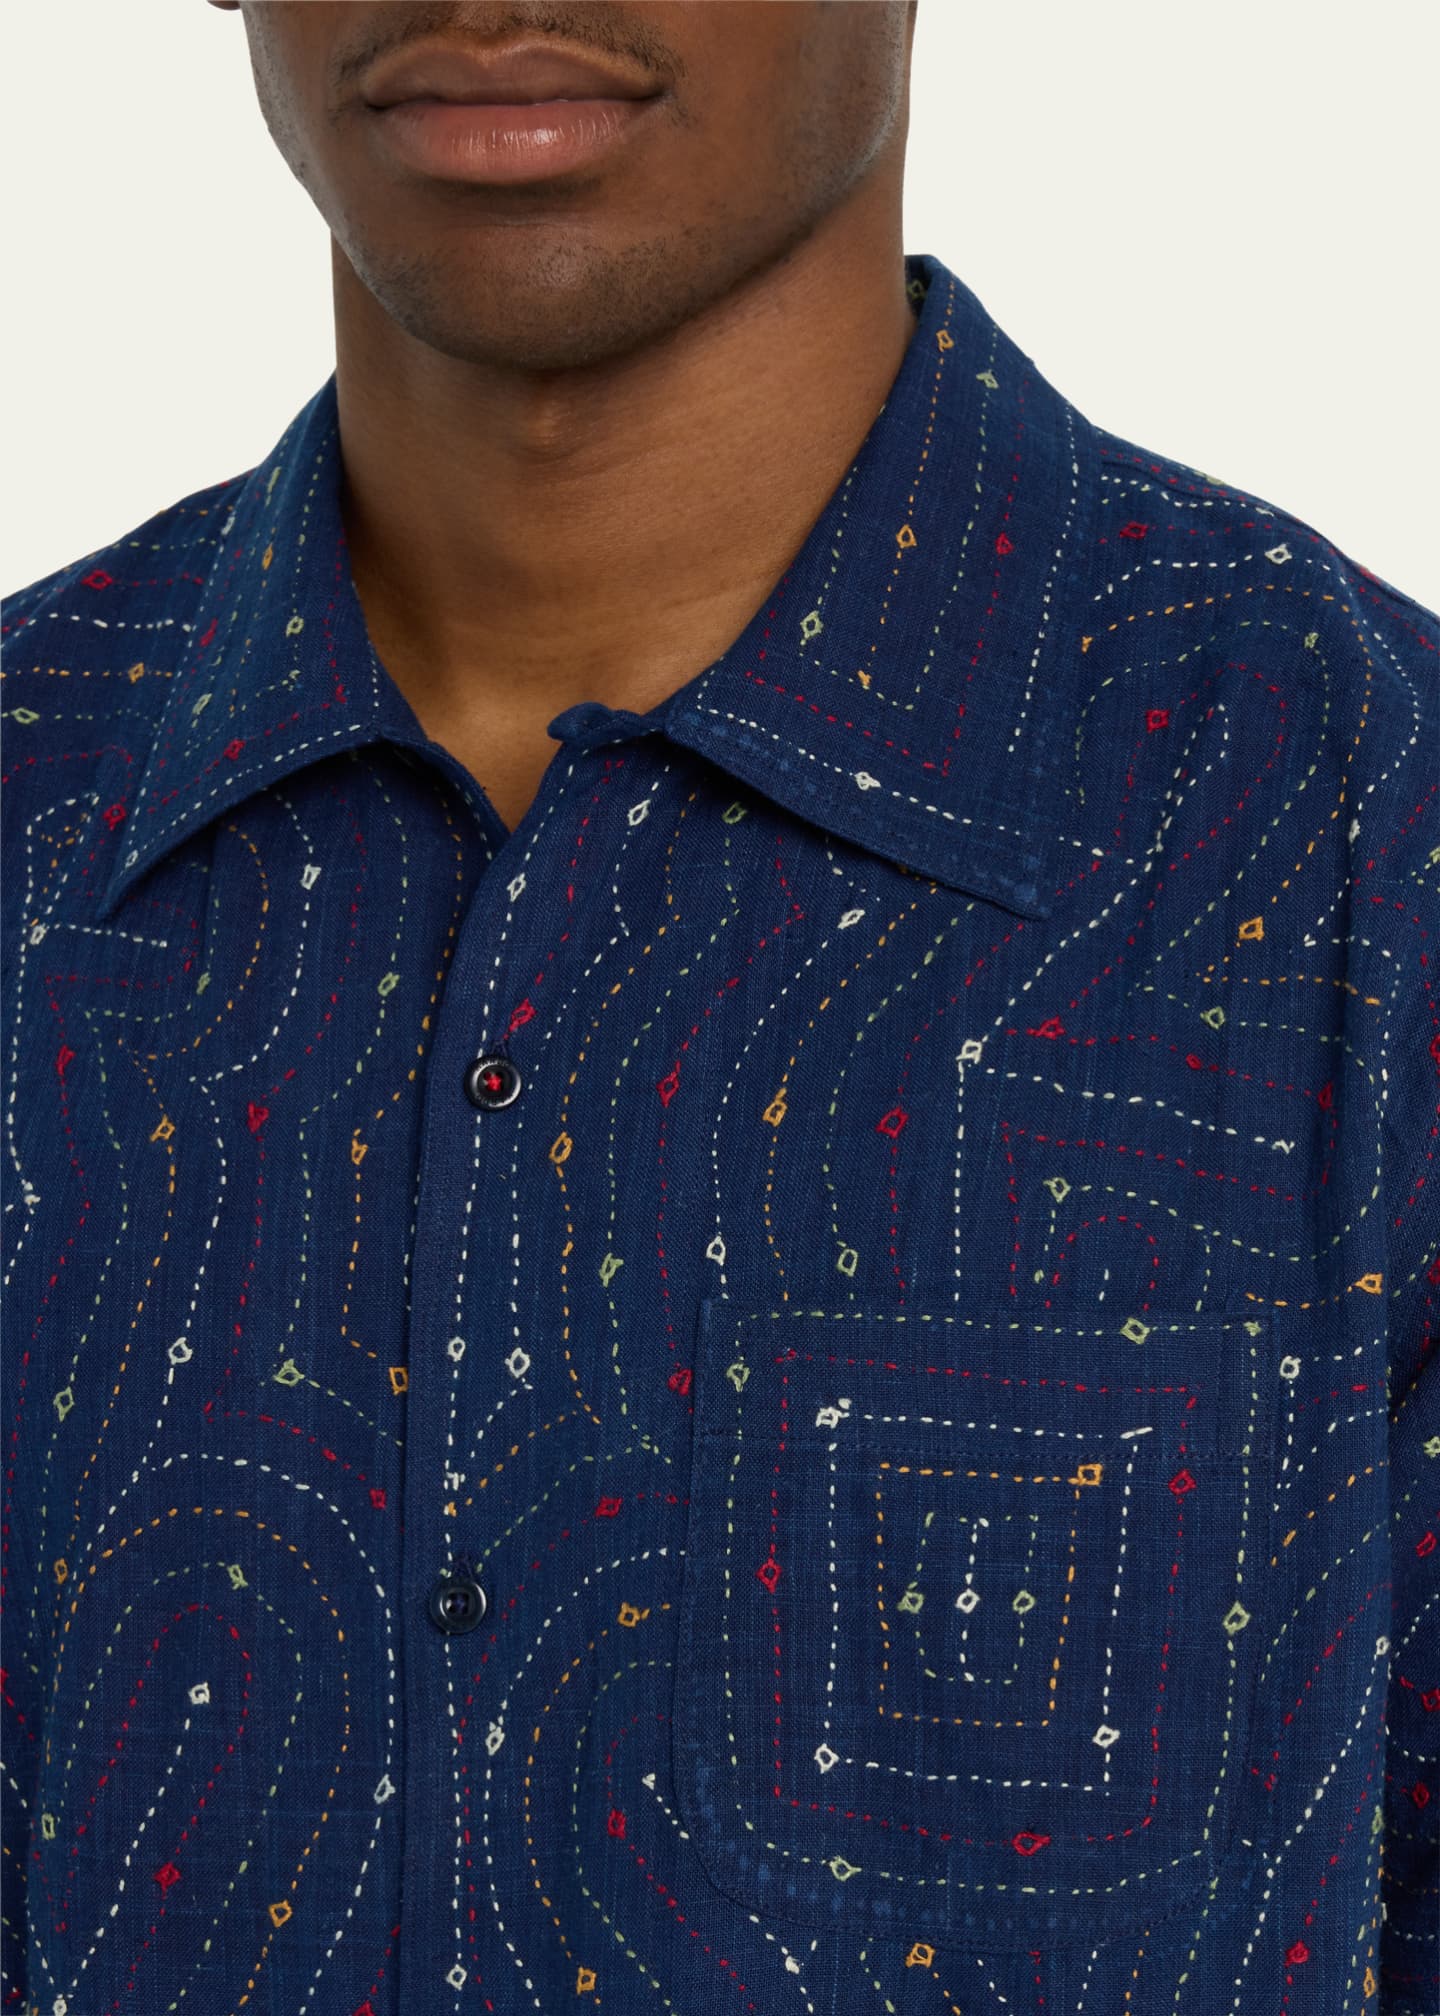 KARDO Men's Kantha Embroidered Sport Shirt - Bergdorf Goodman